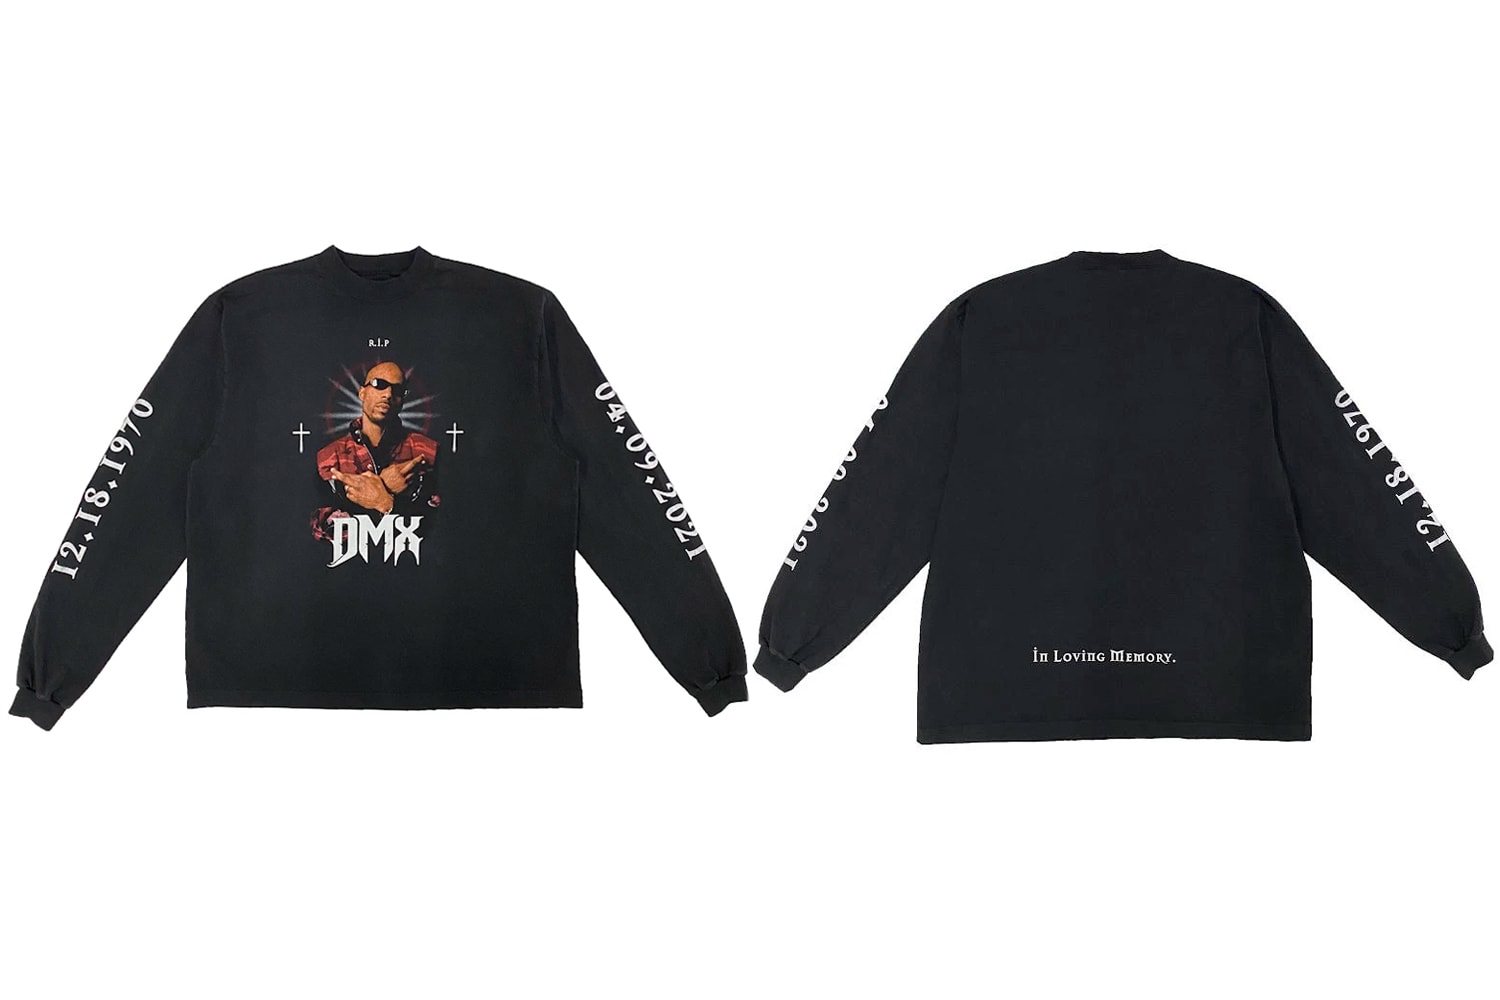 Balenciaga YEEZY DMX Tribute Tee Release Info Buy Price Kanye West Memorial Service